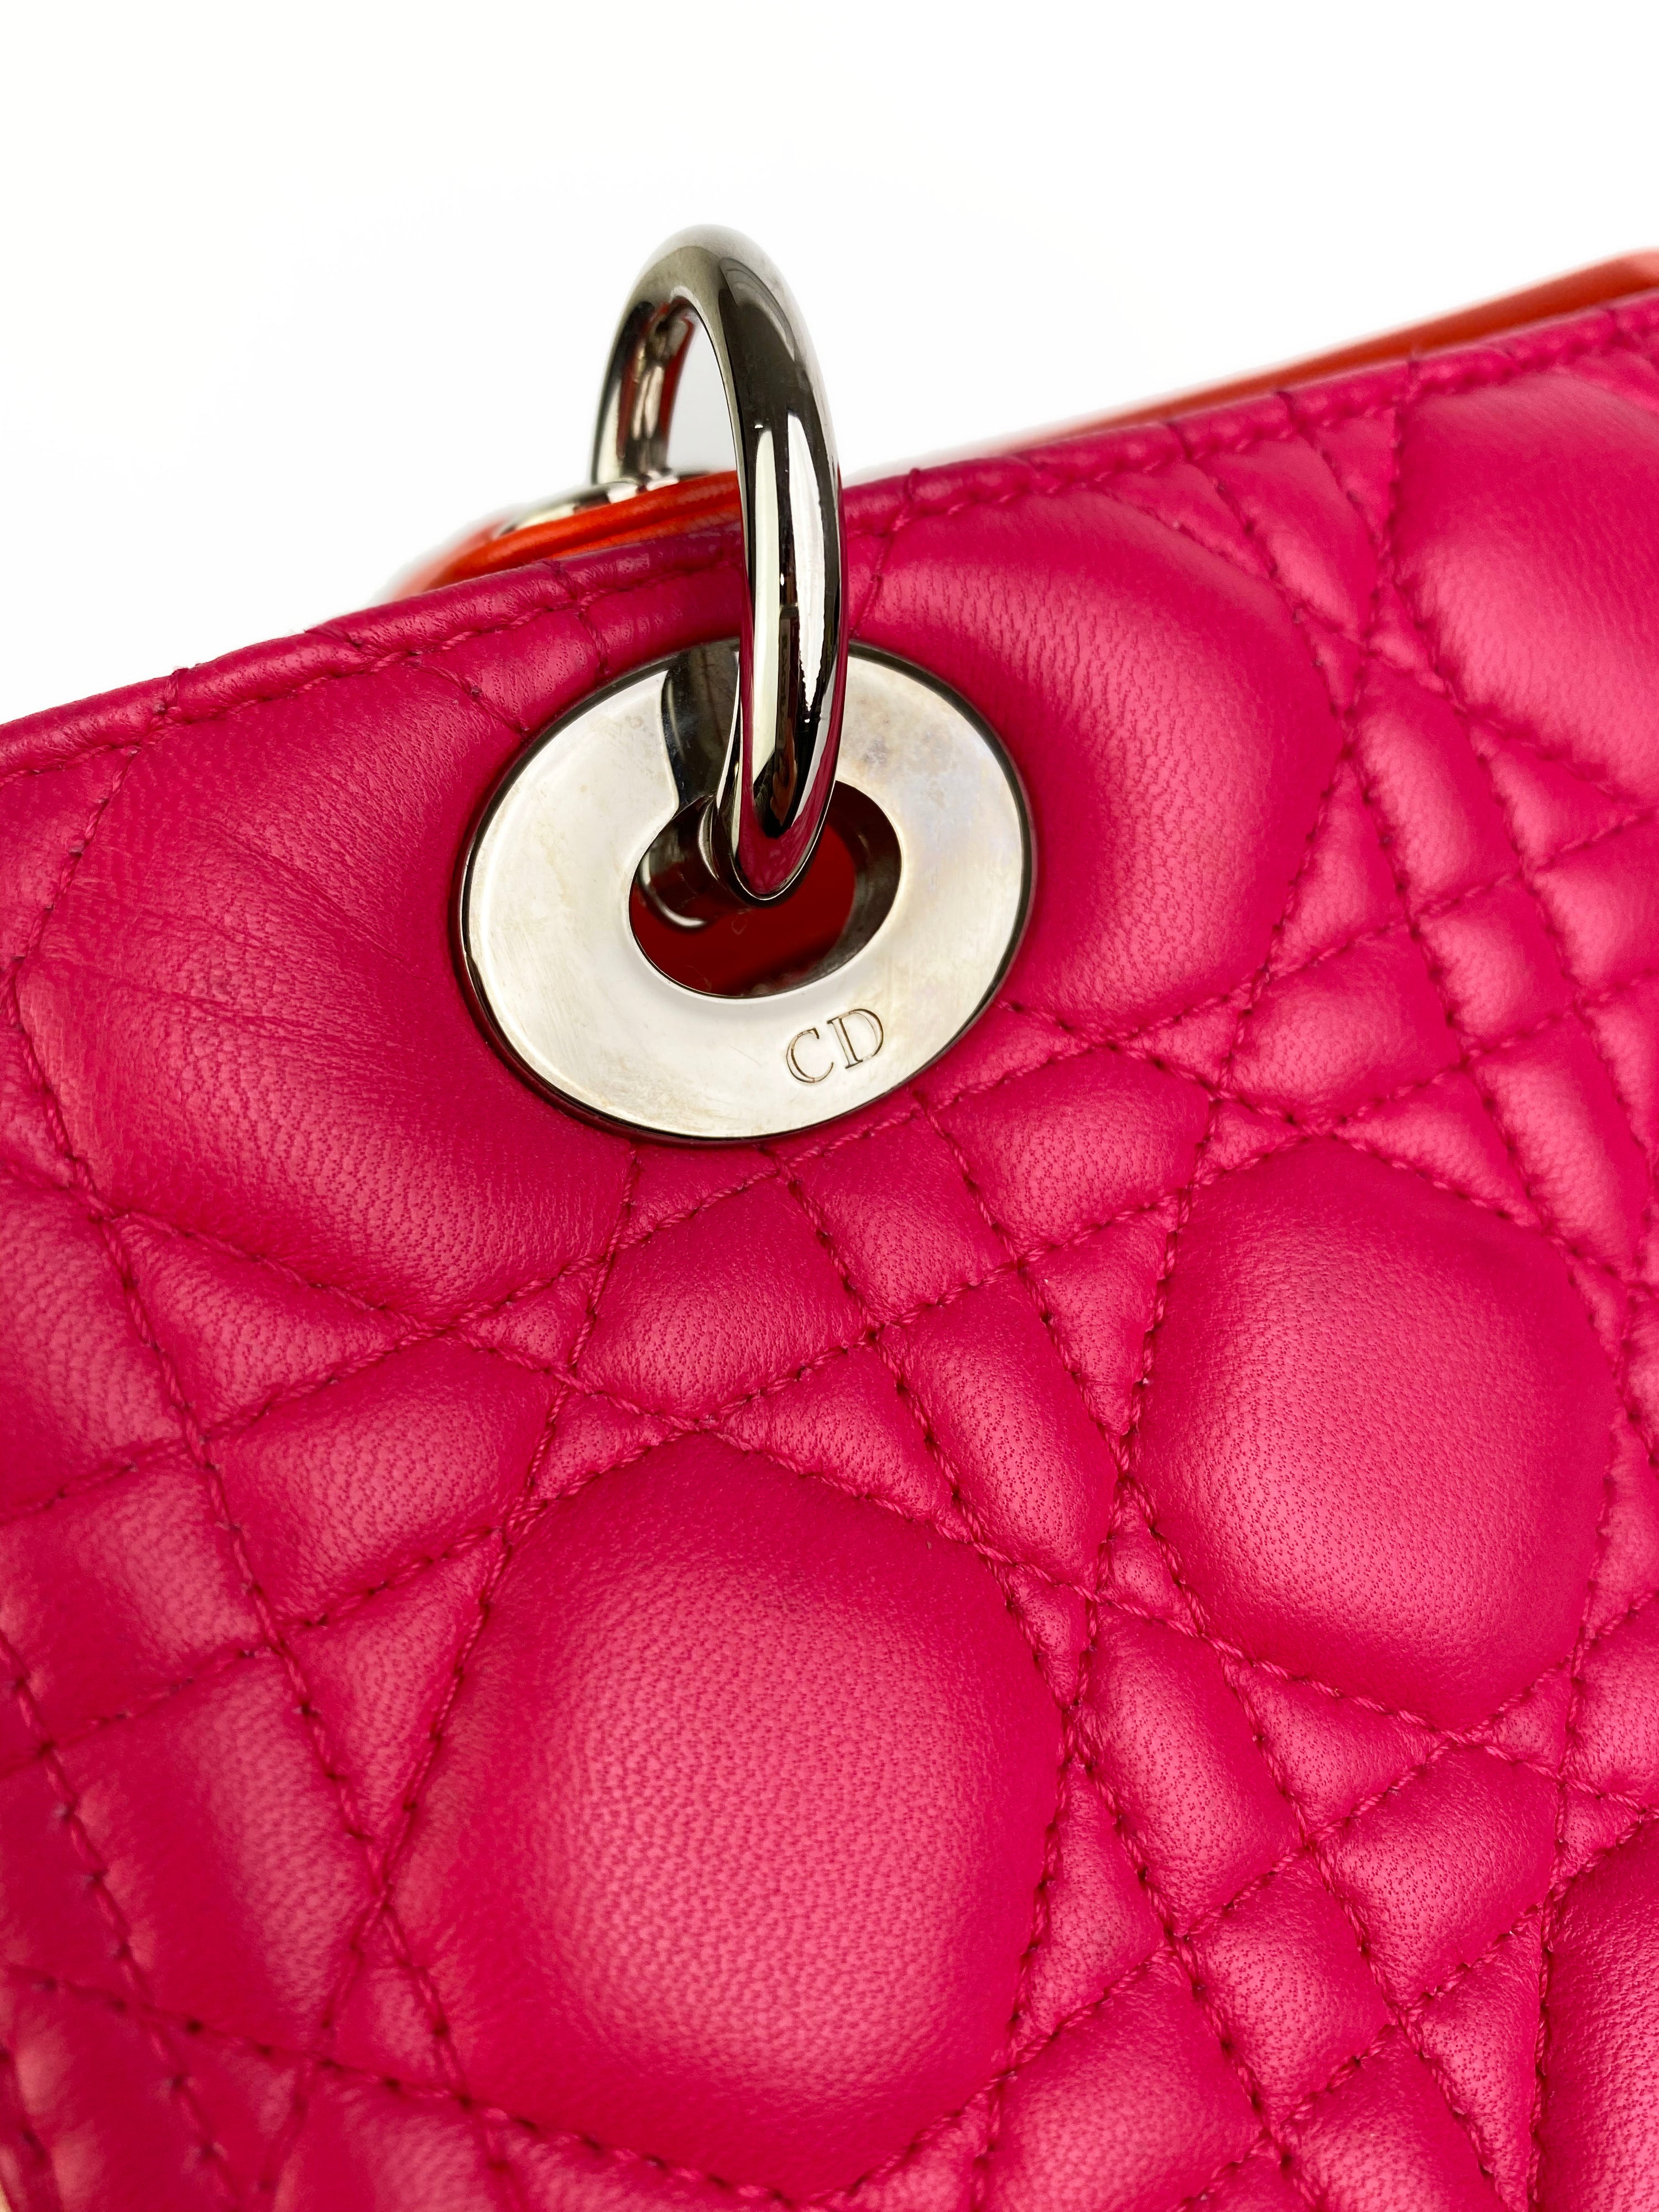 Christian Dior Orange & Pink Colourblock Lady Dior Bag